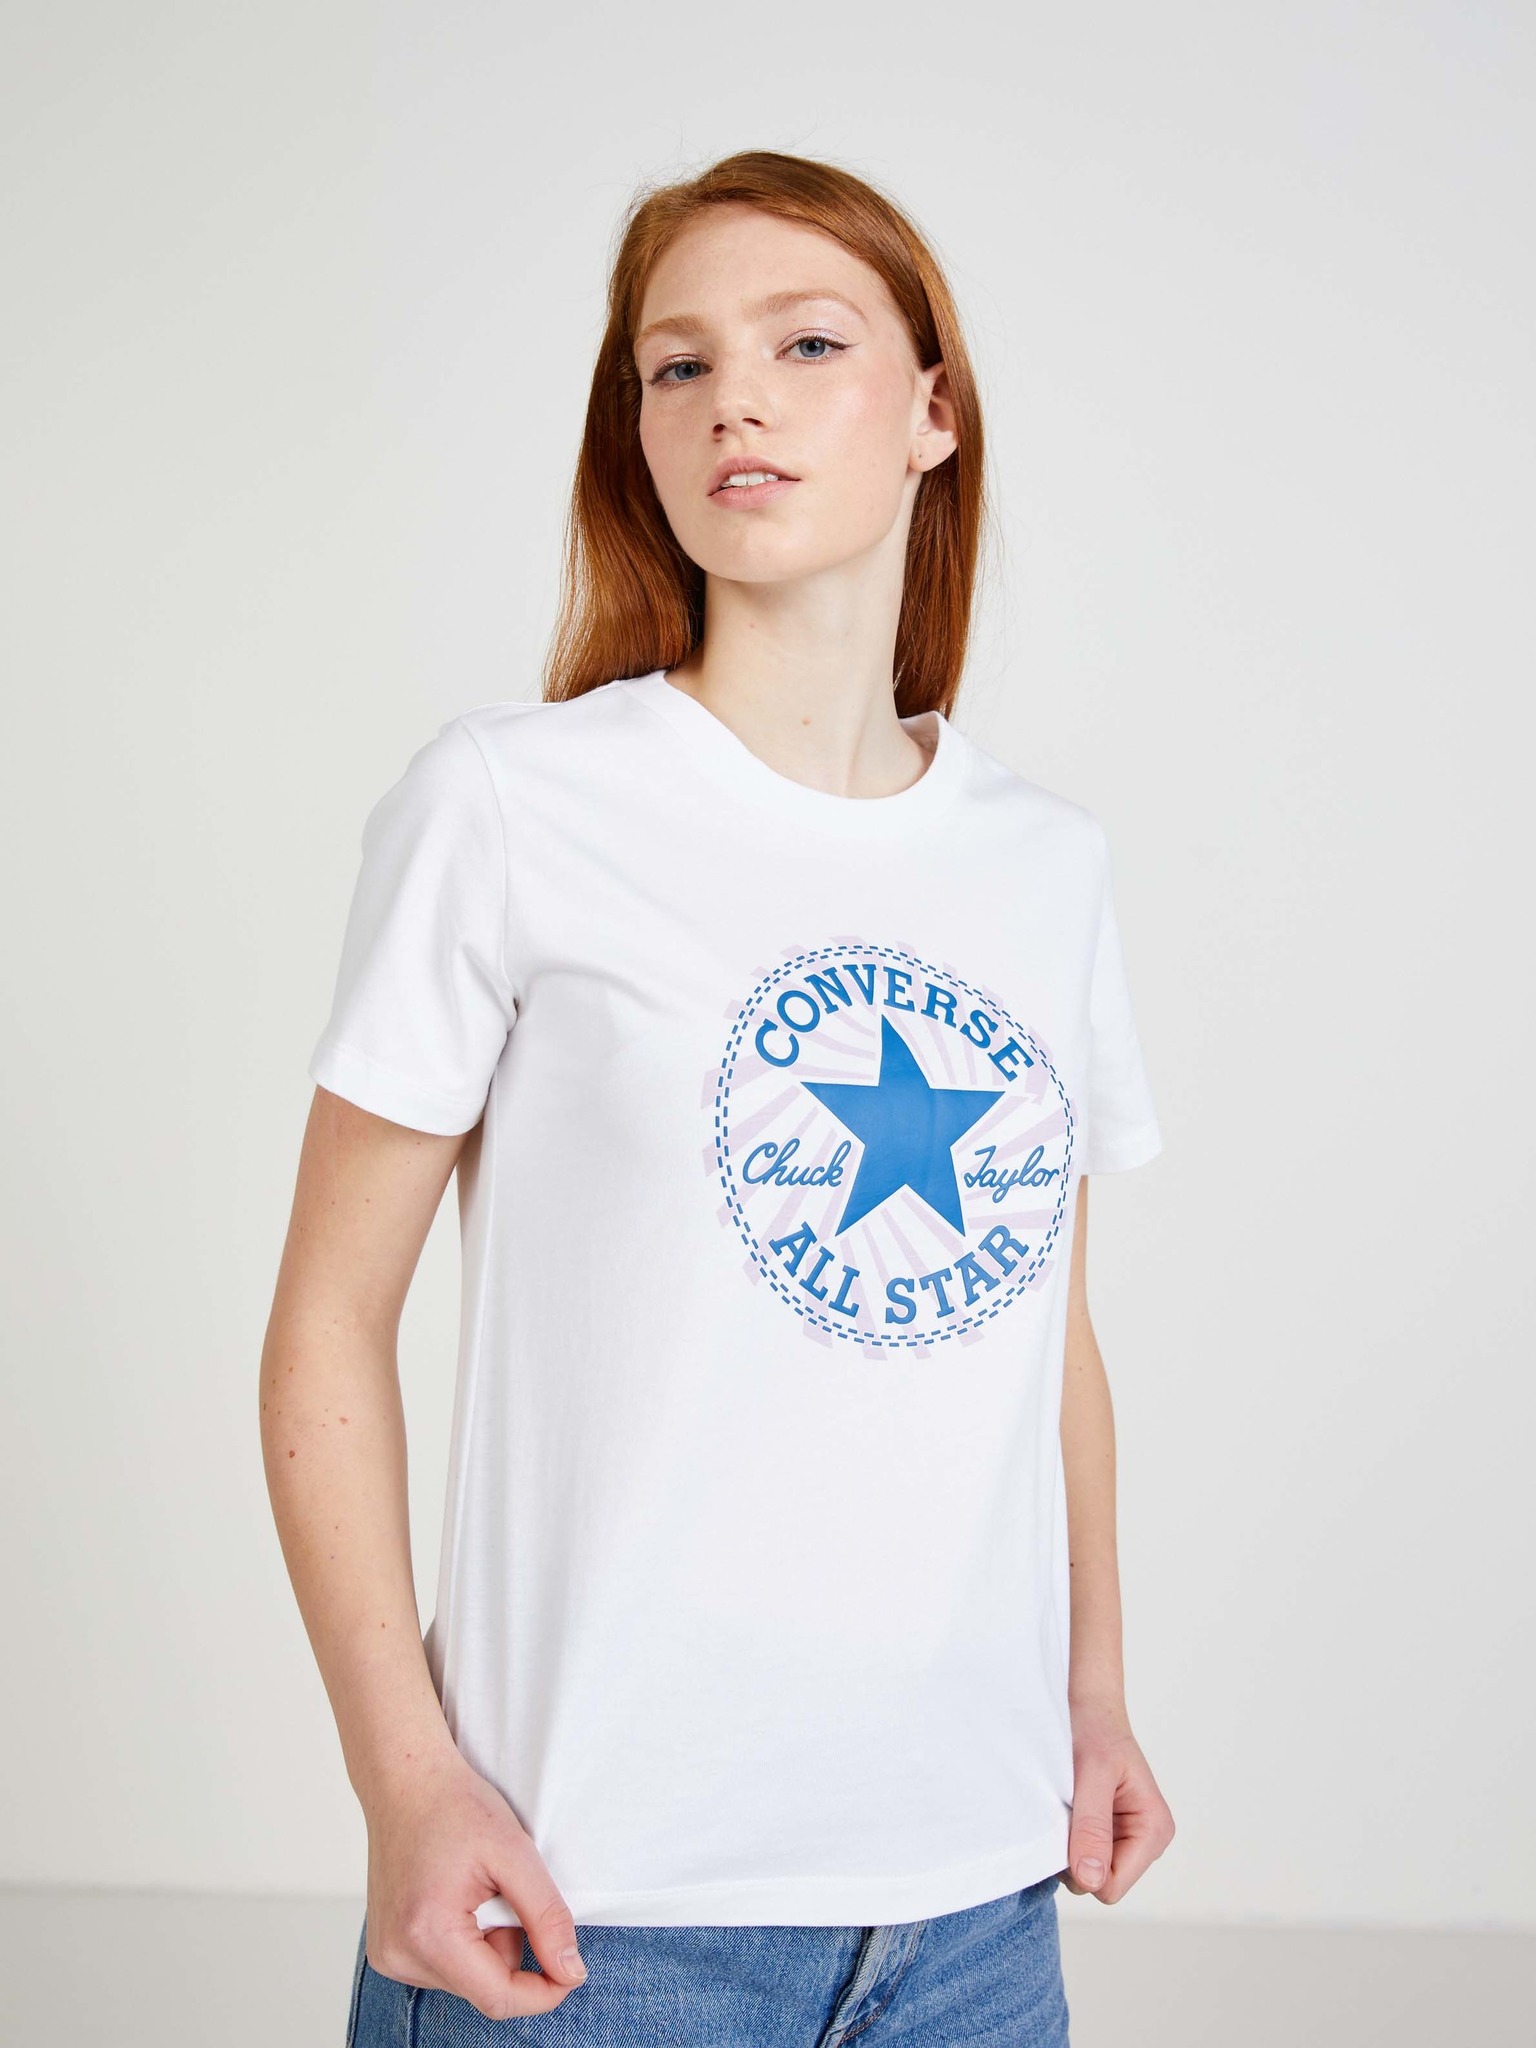 CONVERSE SHOES Girls Size XL White Tee Shirt (13-15 years) Short